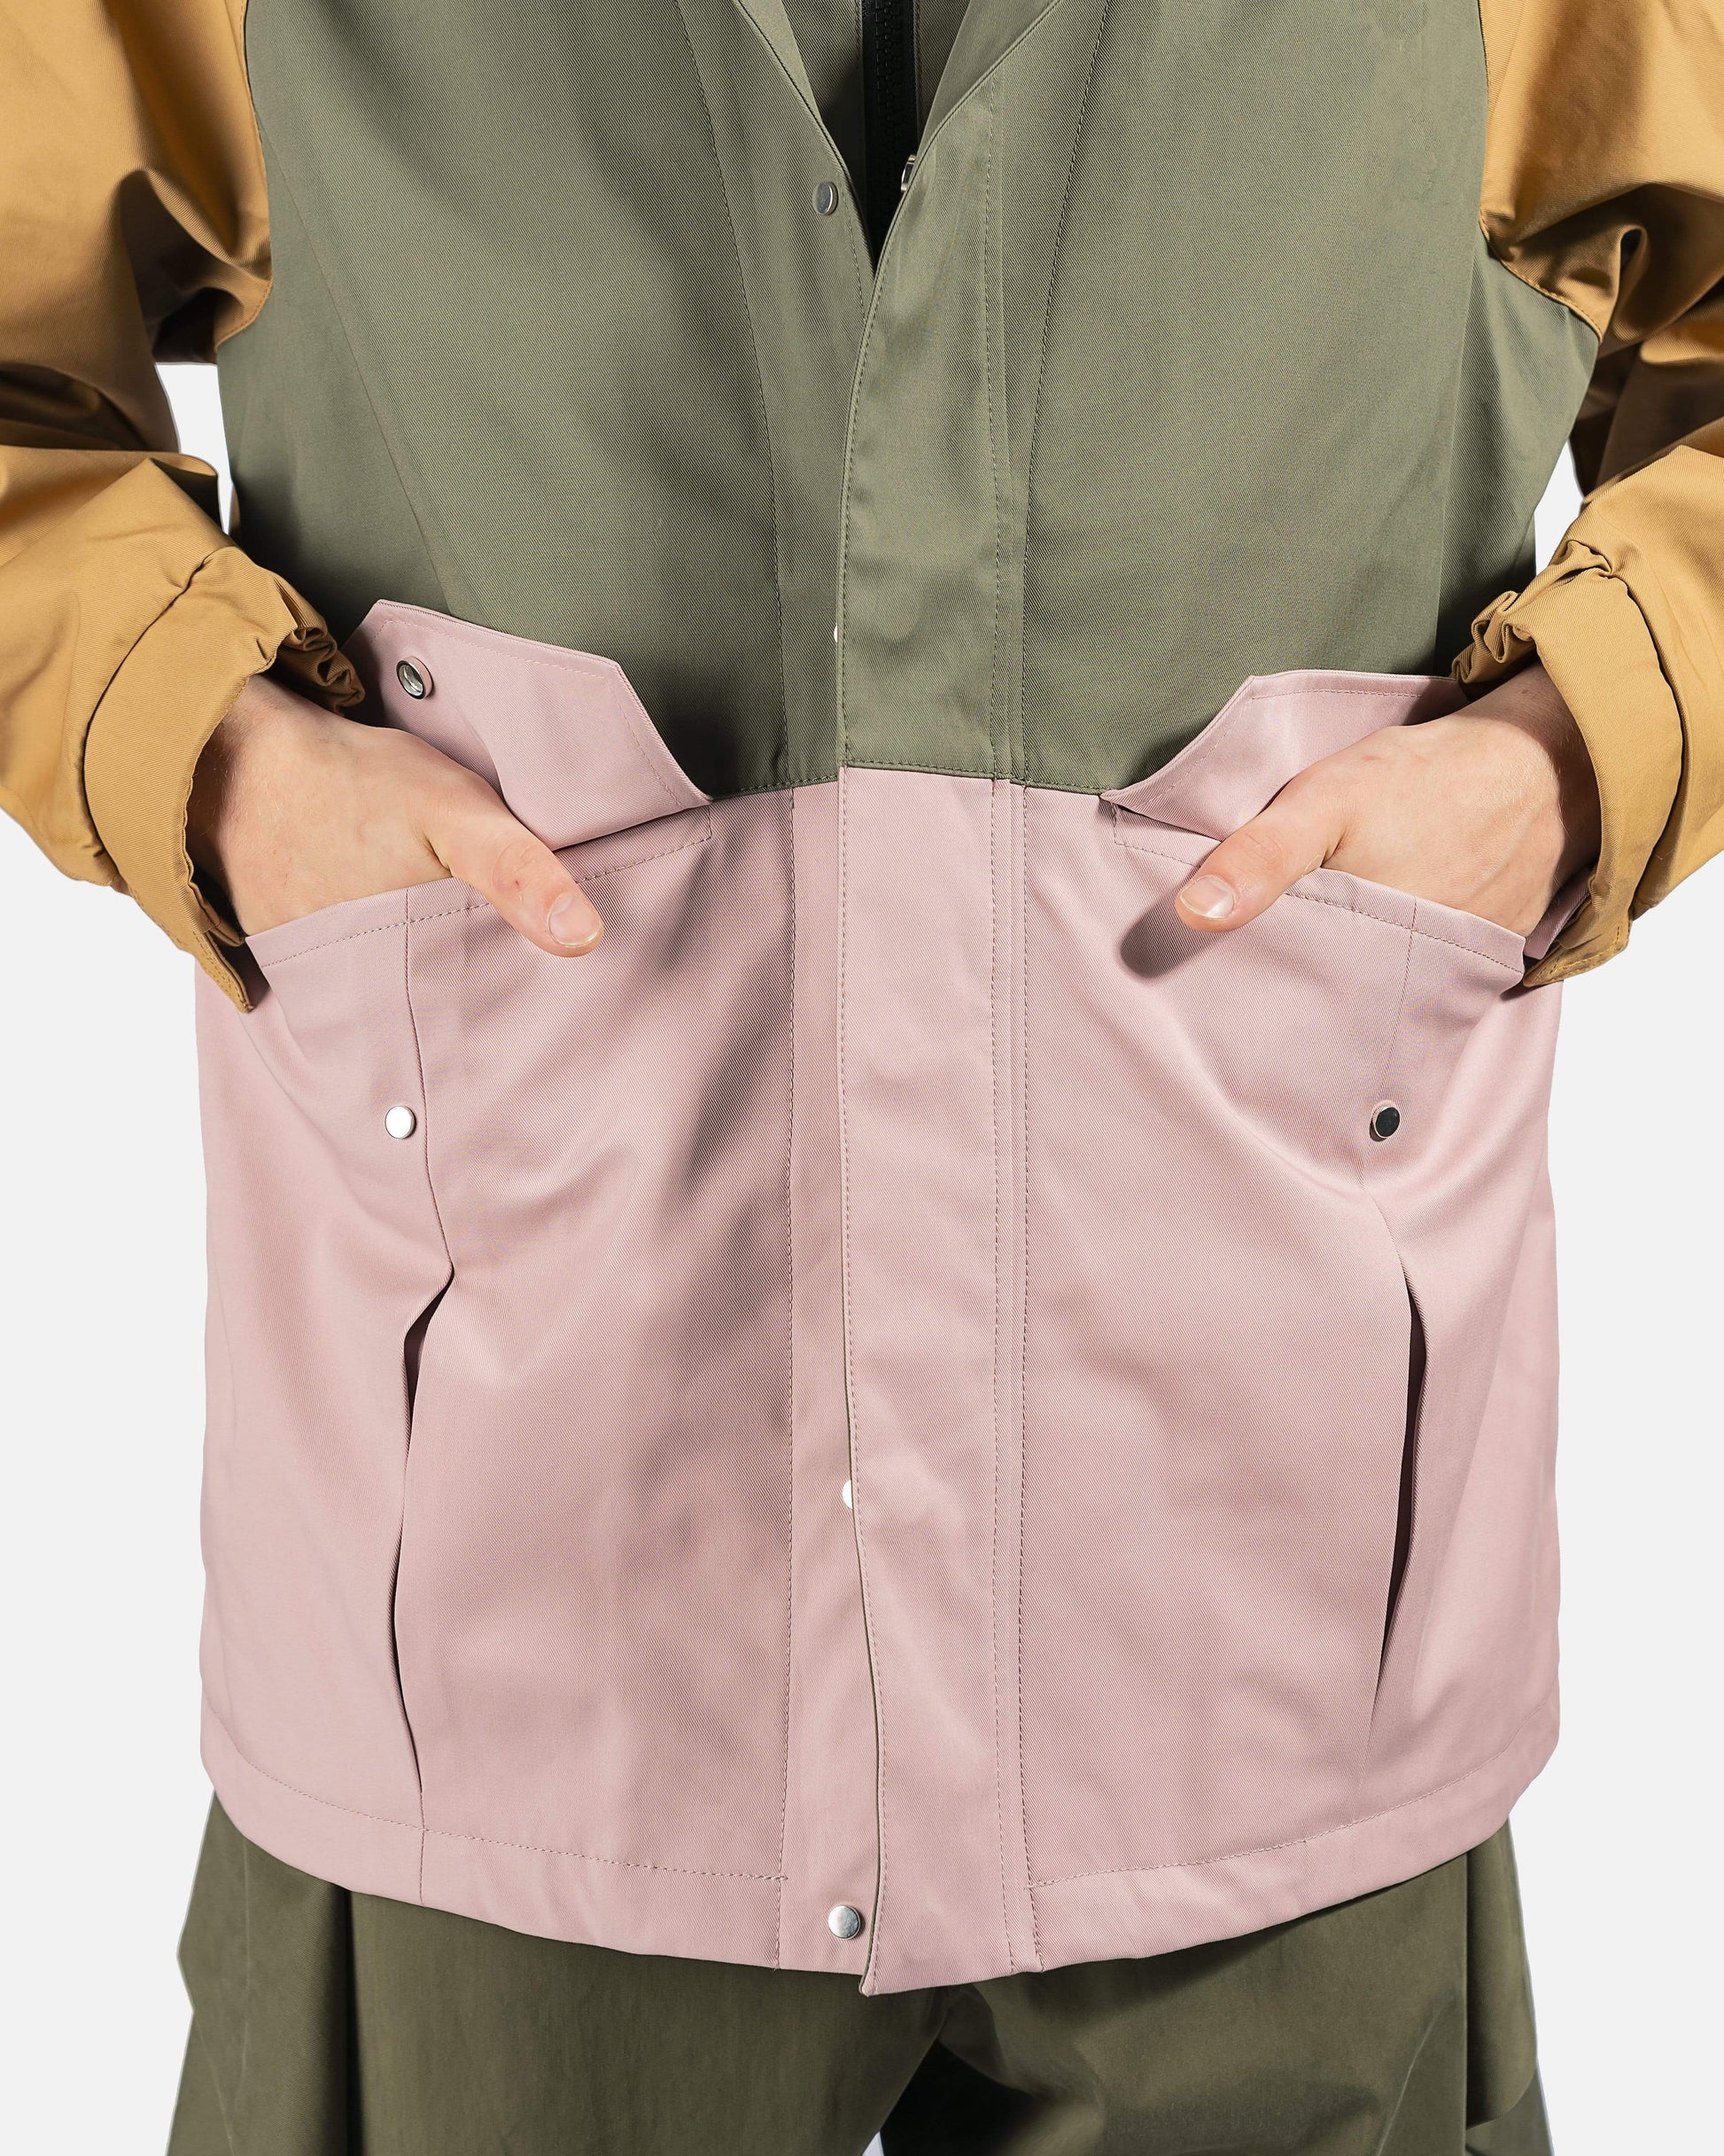 JW Anderson Men's Jackets Puller Colorblock Parka in Khaki/Pink